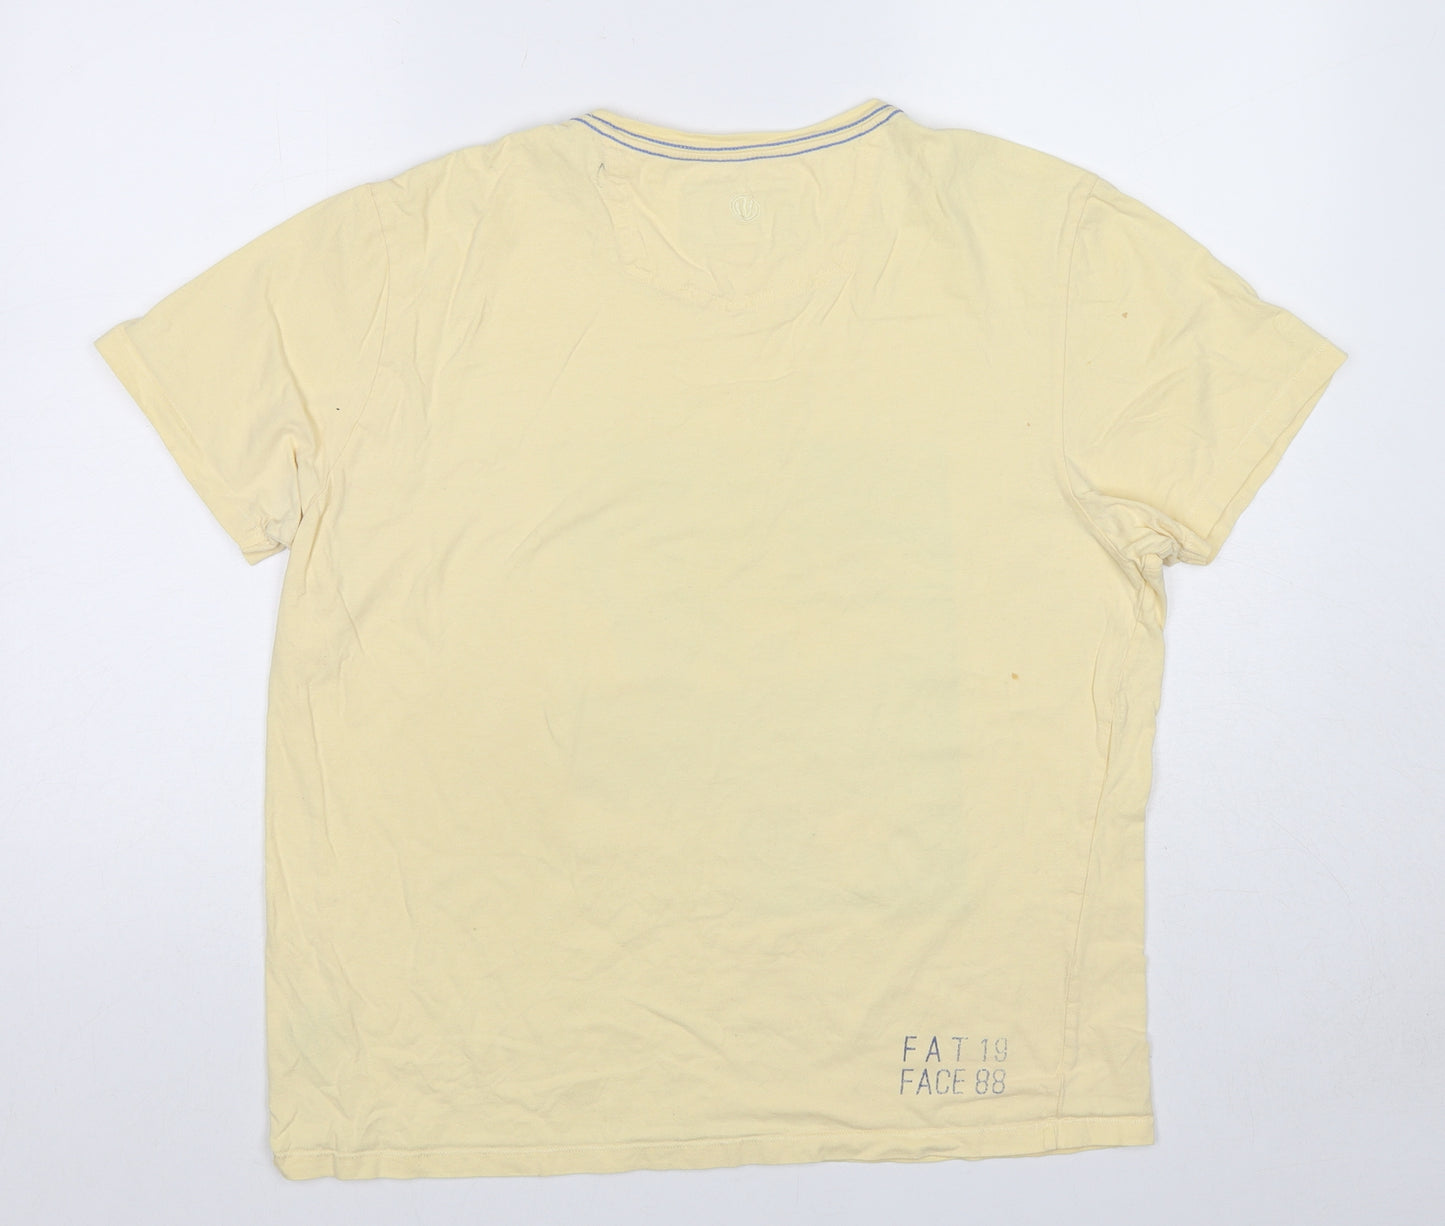 Fat Face Mens Yellow Cotton T-Shirt Size M Crew Neck